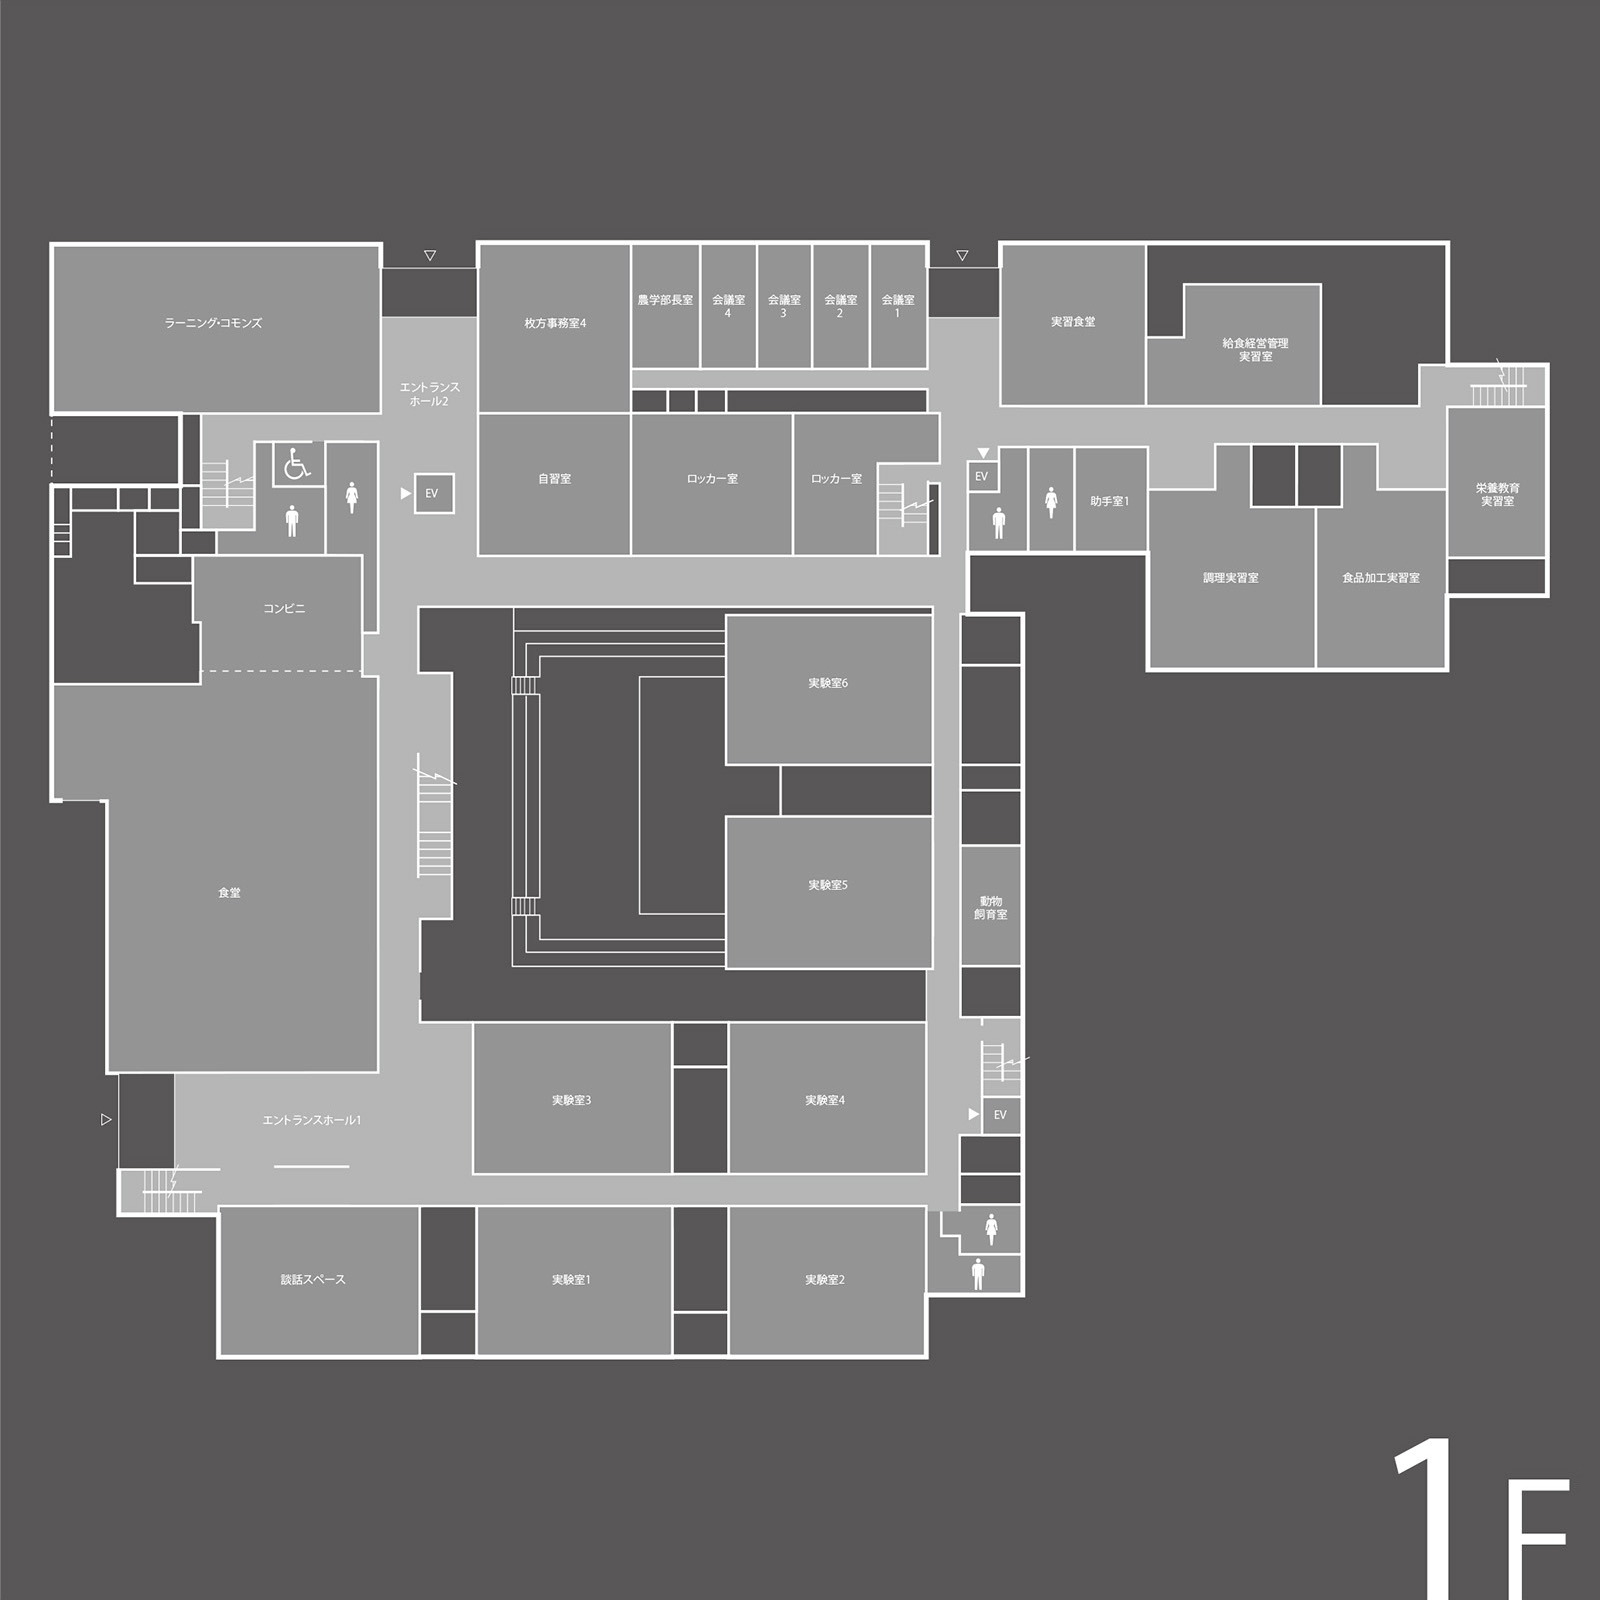 Floor-1 Illust